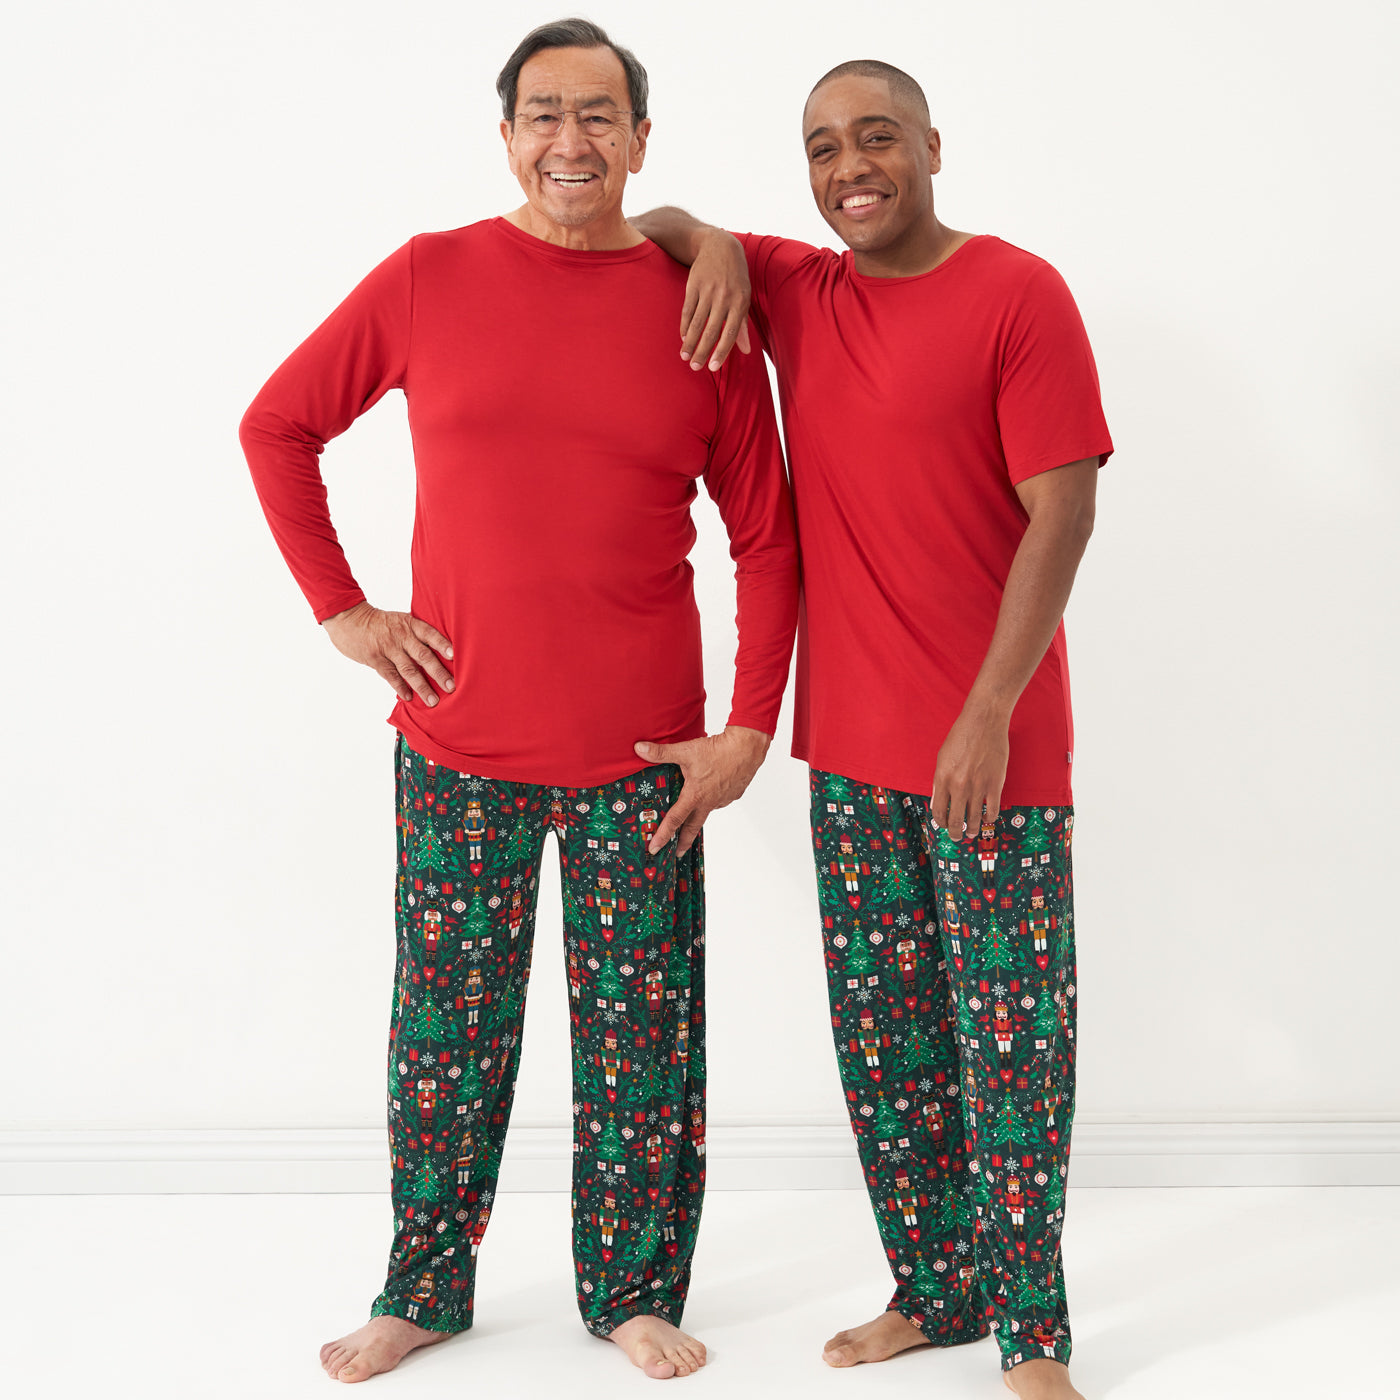 Two men wearing Holiday Red men's pajama tops and coordinating holiday pajama pants